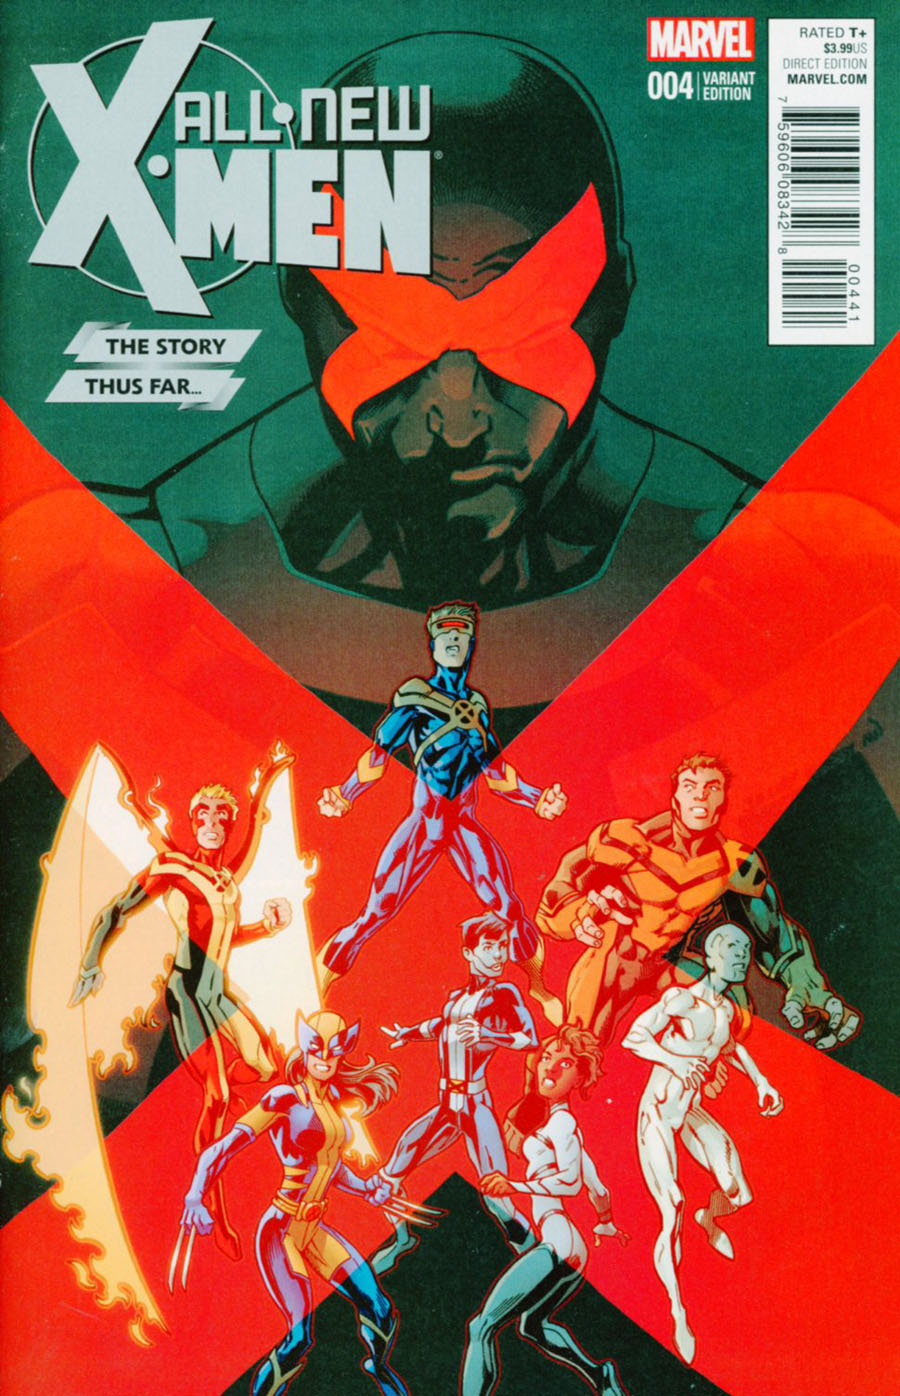 All-New X-Men Vol 2 #4 Cover C Incentive Mark Bagley Story Thus Far Variant Cover